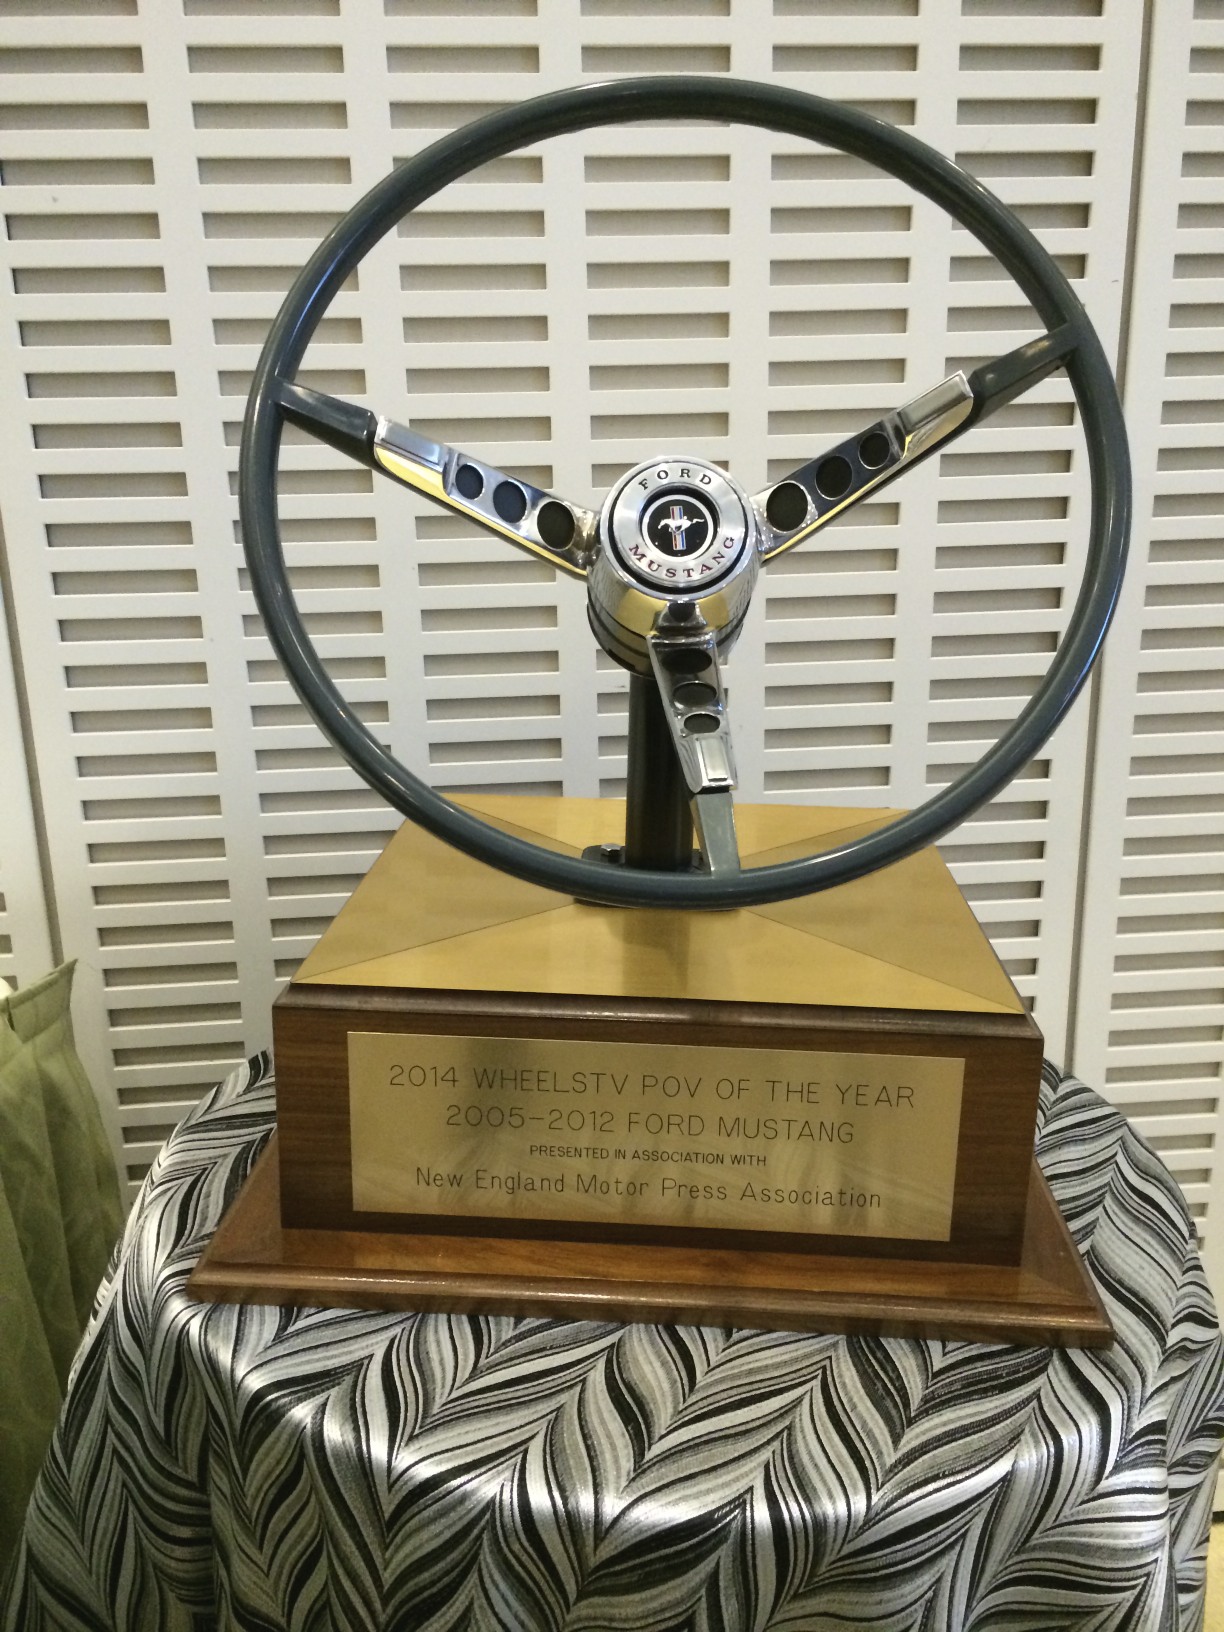 The POV Trophy